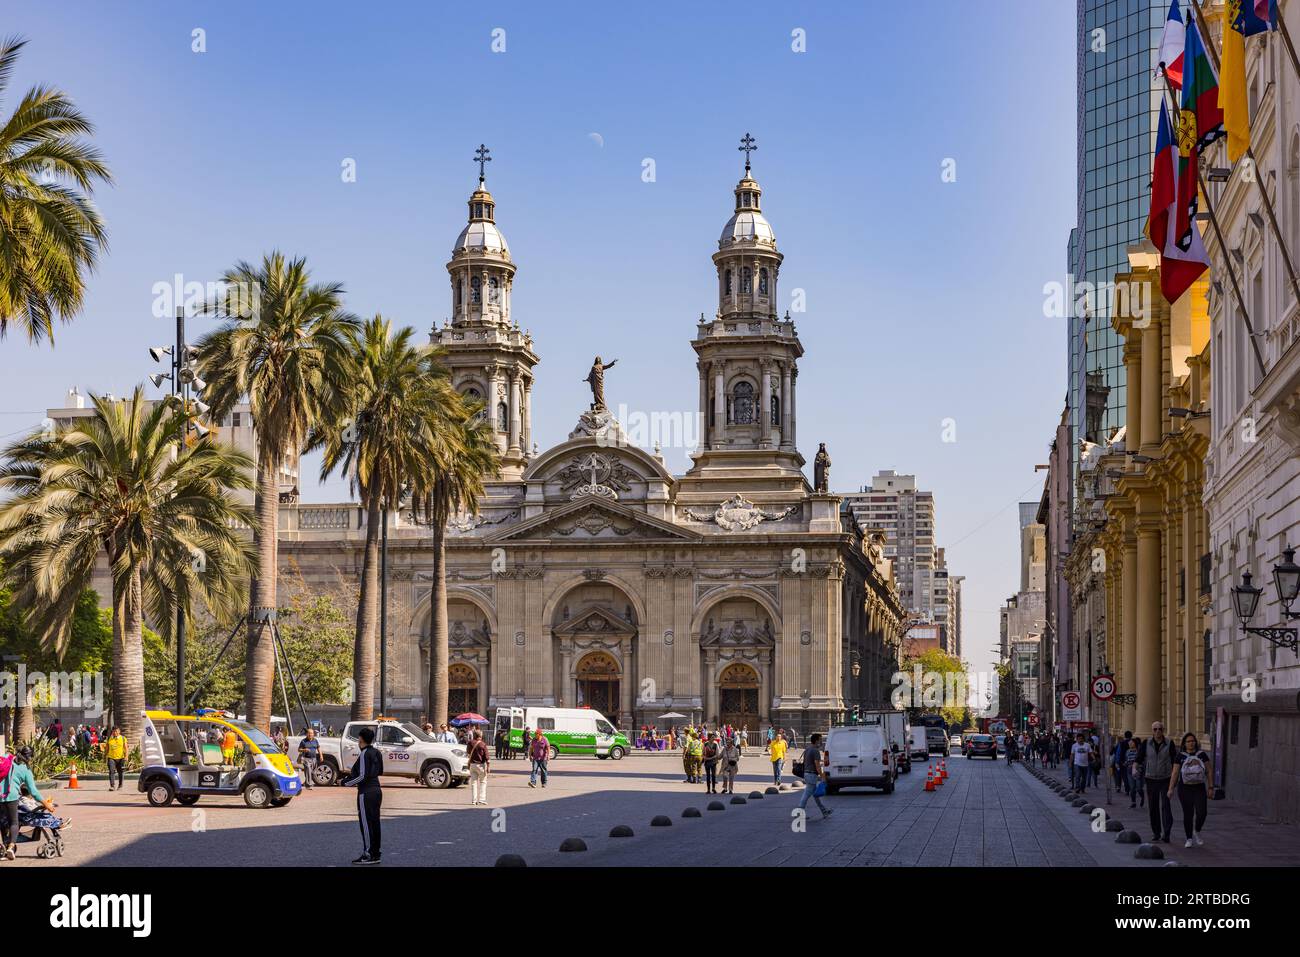 The Catedral Metropolitana de Santiago at the Plaza de Armas in the heart of the Chilean capital of Santiago de Chile, South America Stock Photo